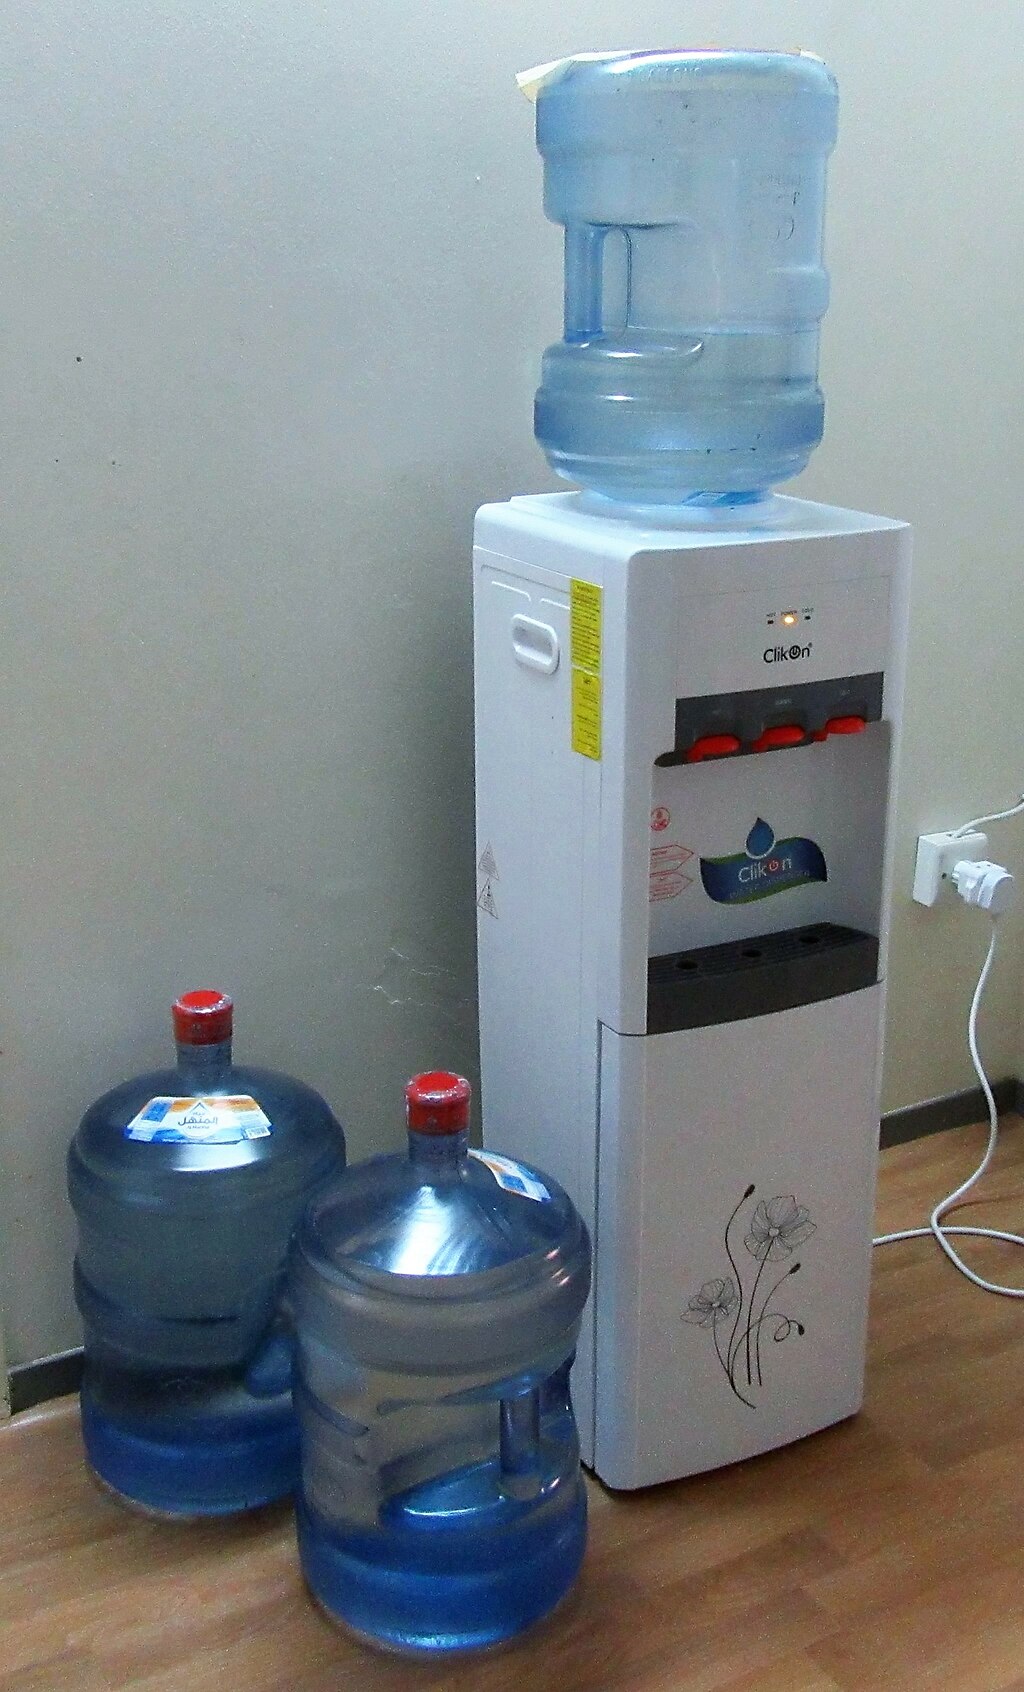 https://upload.wikimedia.org/wikipedia/commons/thumb/3/31/Clickon_Water_Dispenser.jpg/1024px-Clickon_Water_Dispenser.jpg